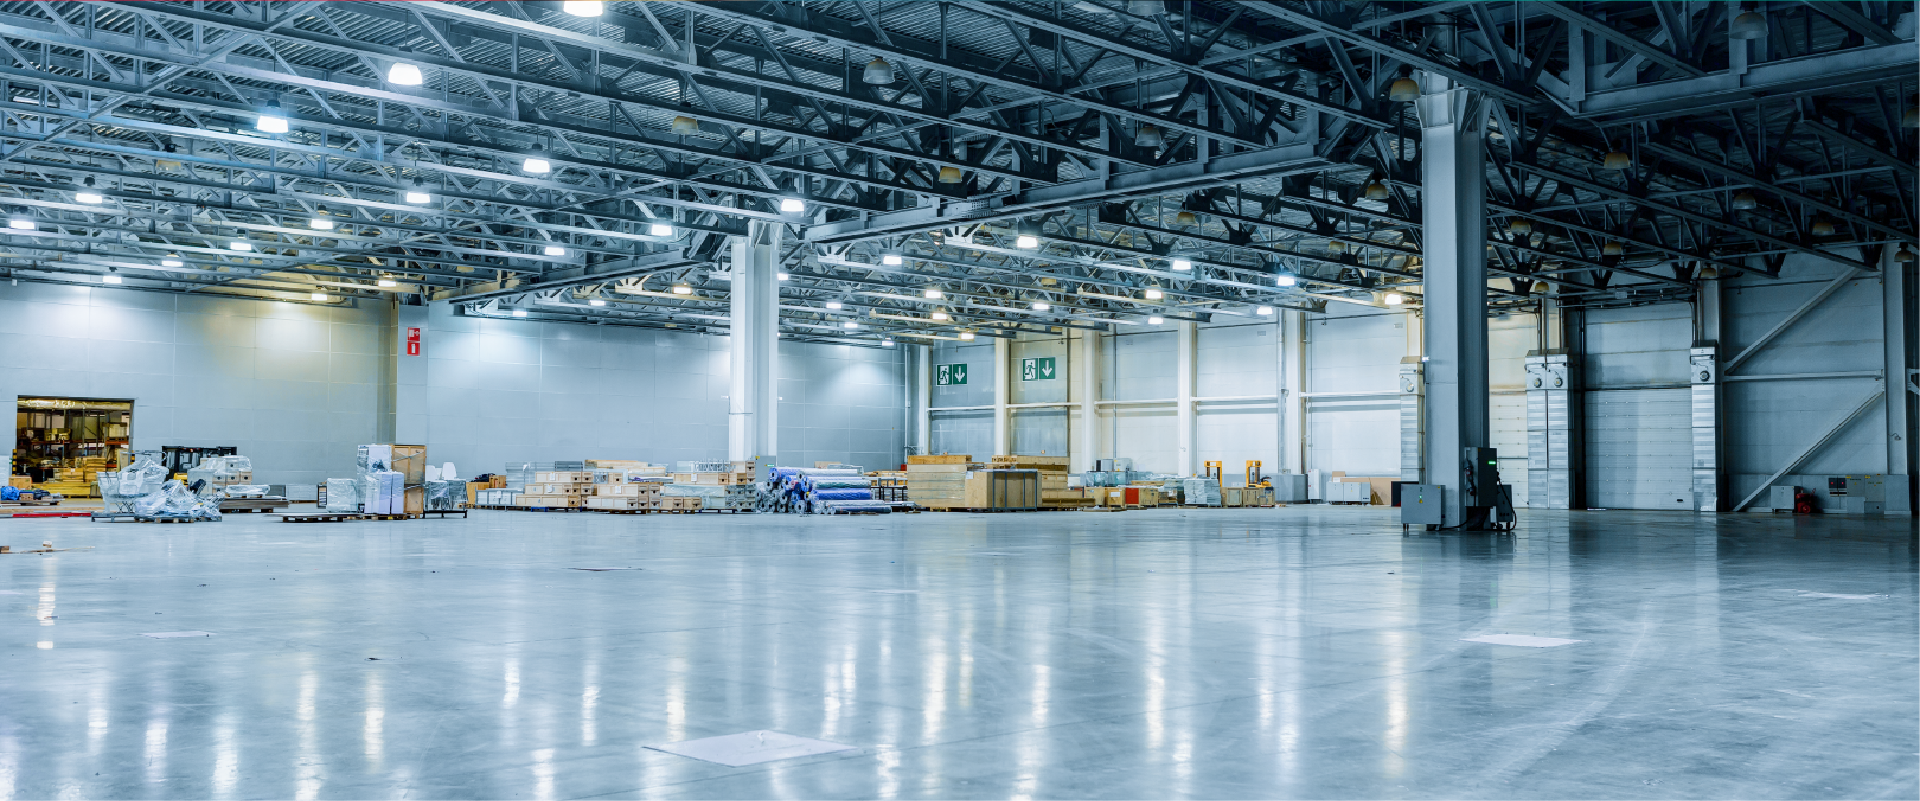 warehouse-concrete-floor slider Thin